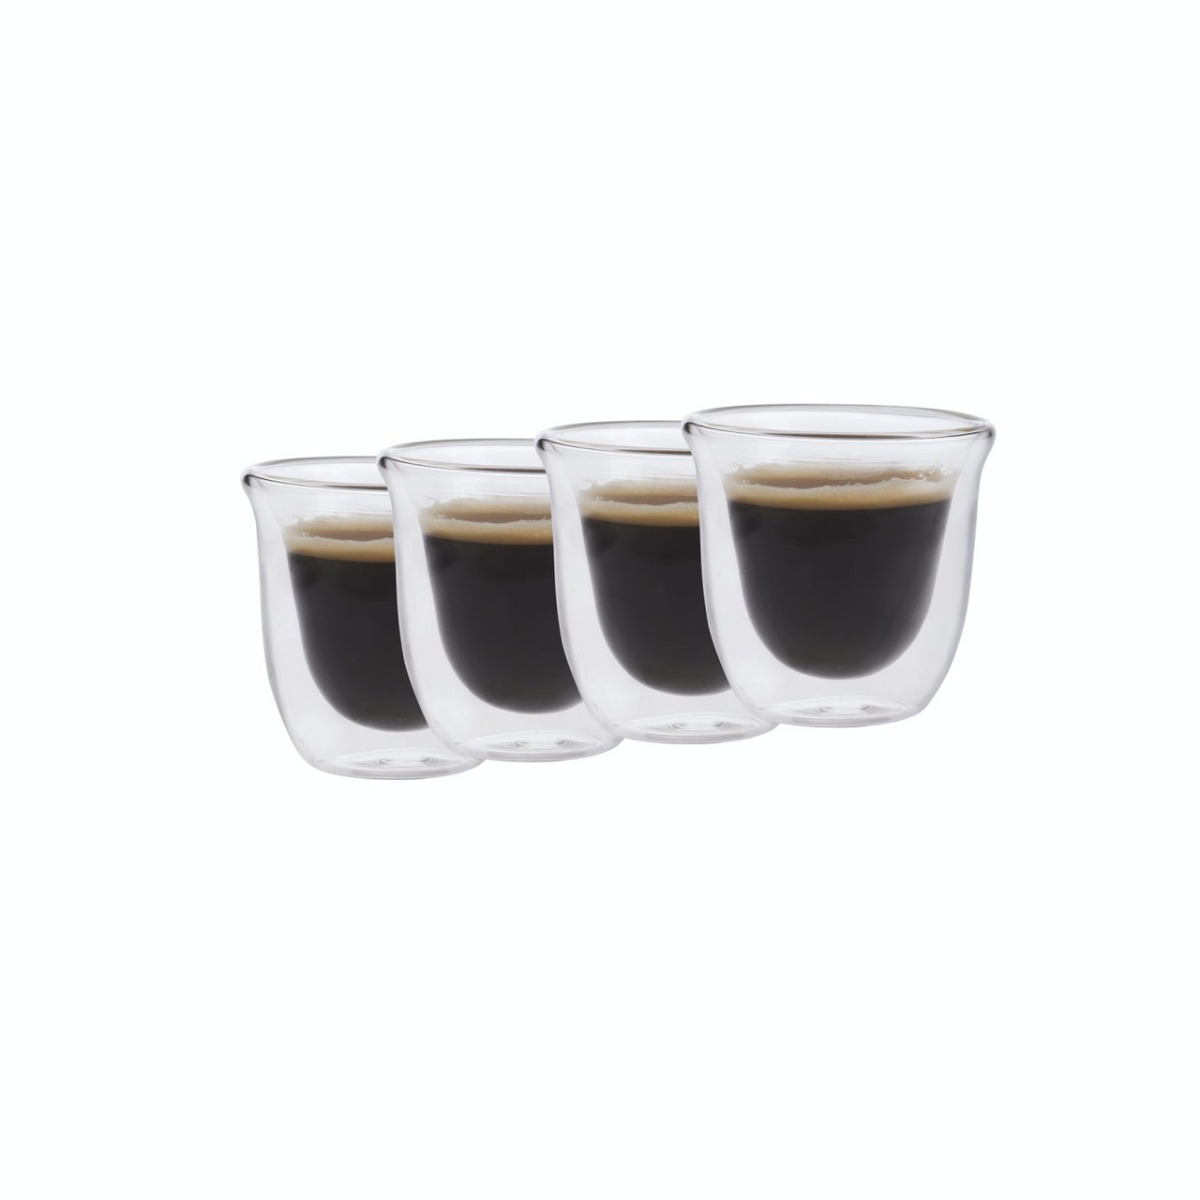 La Cafetière Dubbelwandige Espresso Glazen 4 stuks